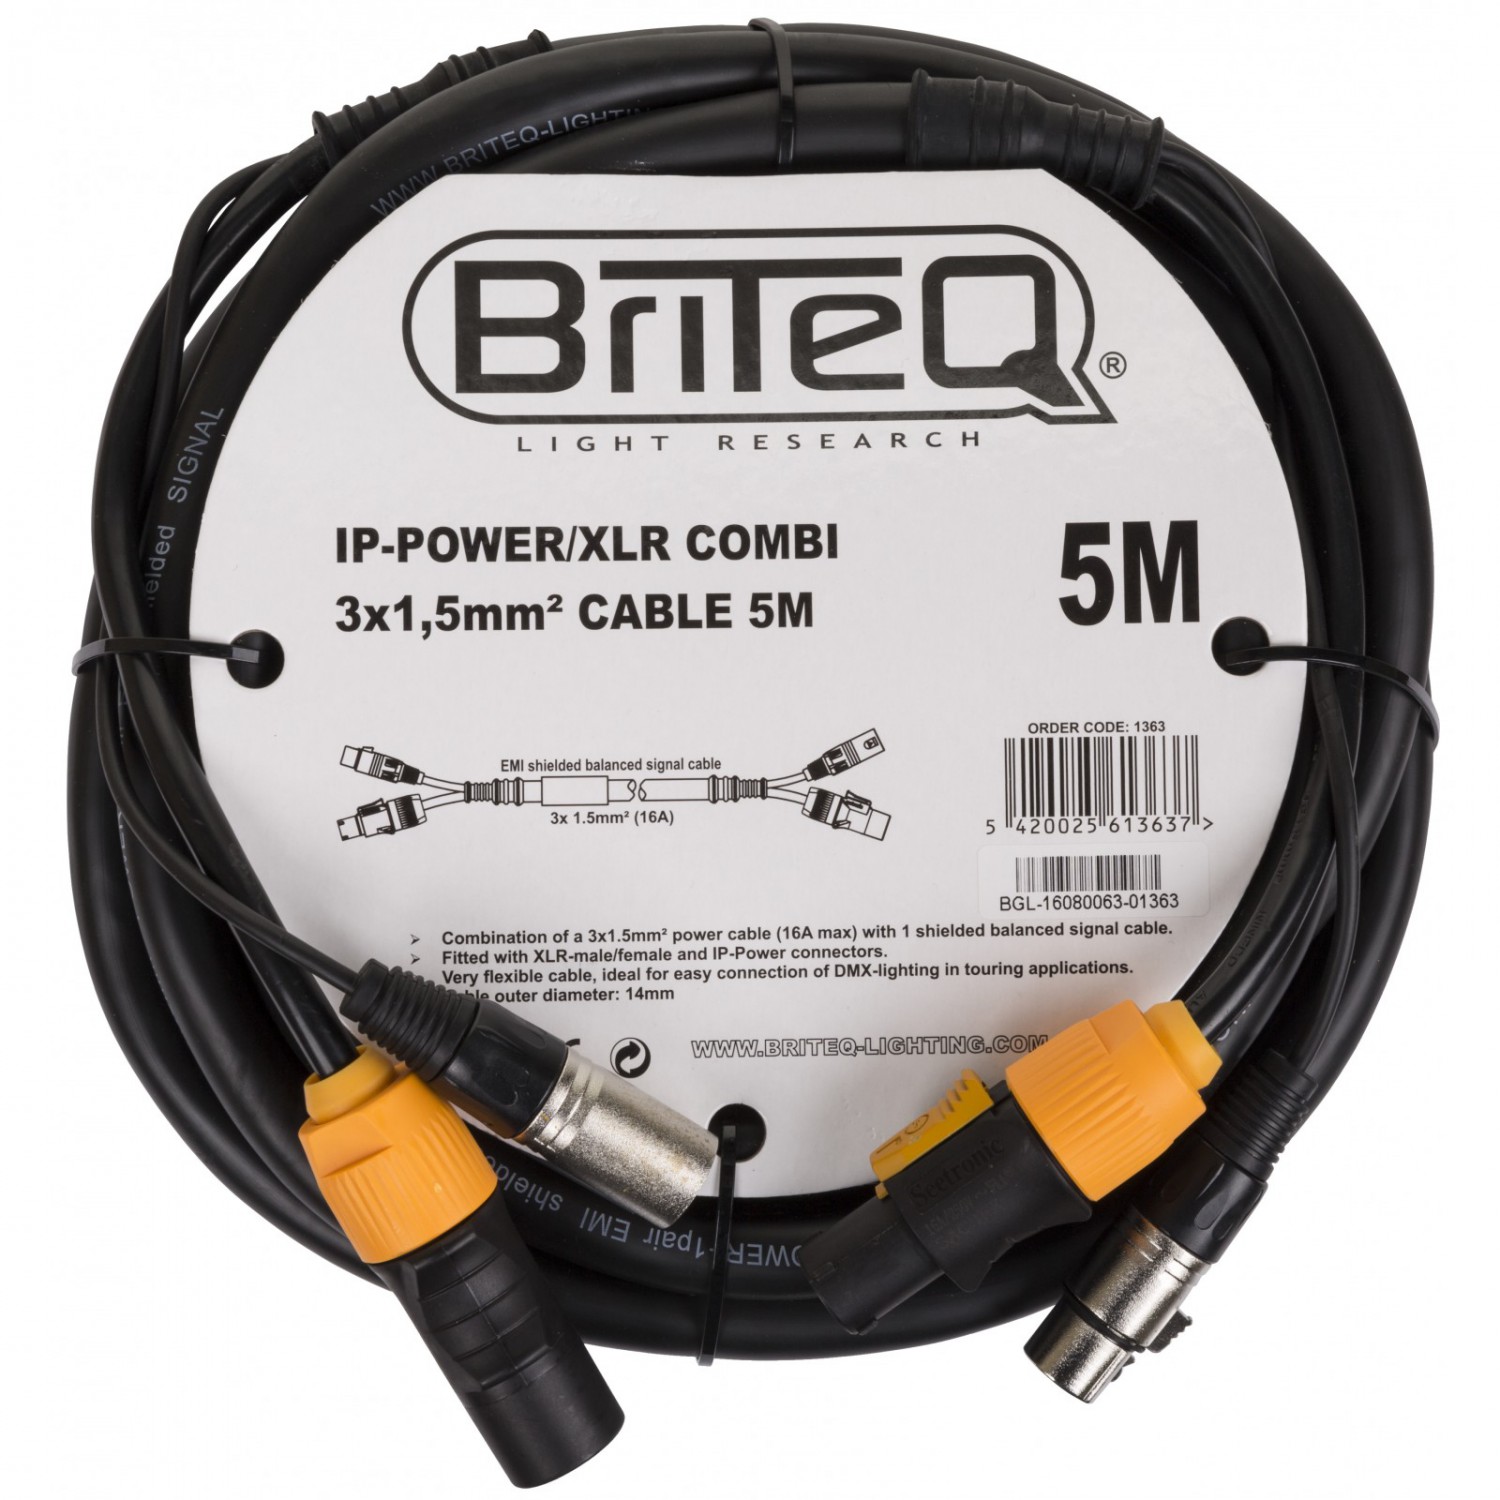 Briteq IP-POWER/XLR COMBI CABLE 5M - kabel kombo powercon/xlr 5m